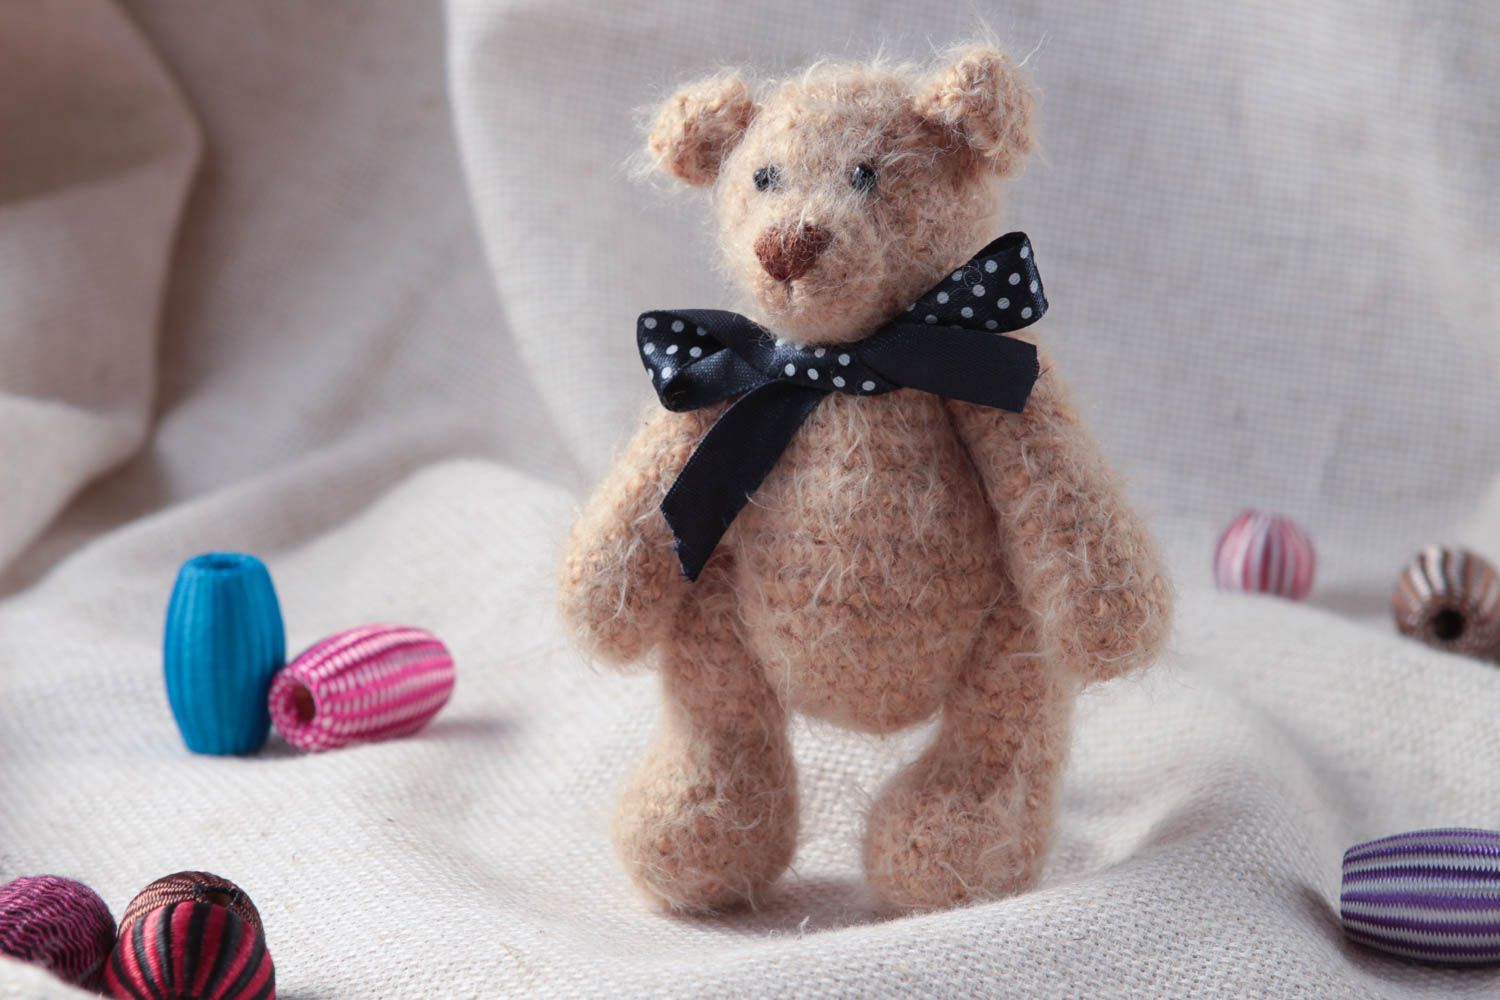 Handmade soft toy stuffed animals bear toy gifts for kids nursery decor photo 1